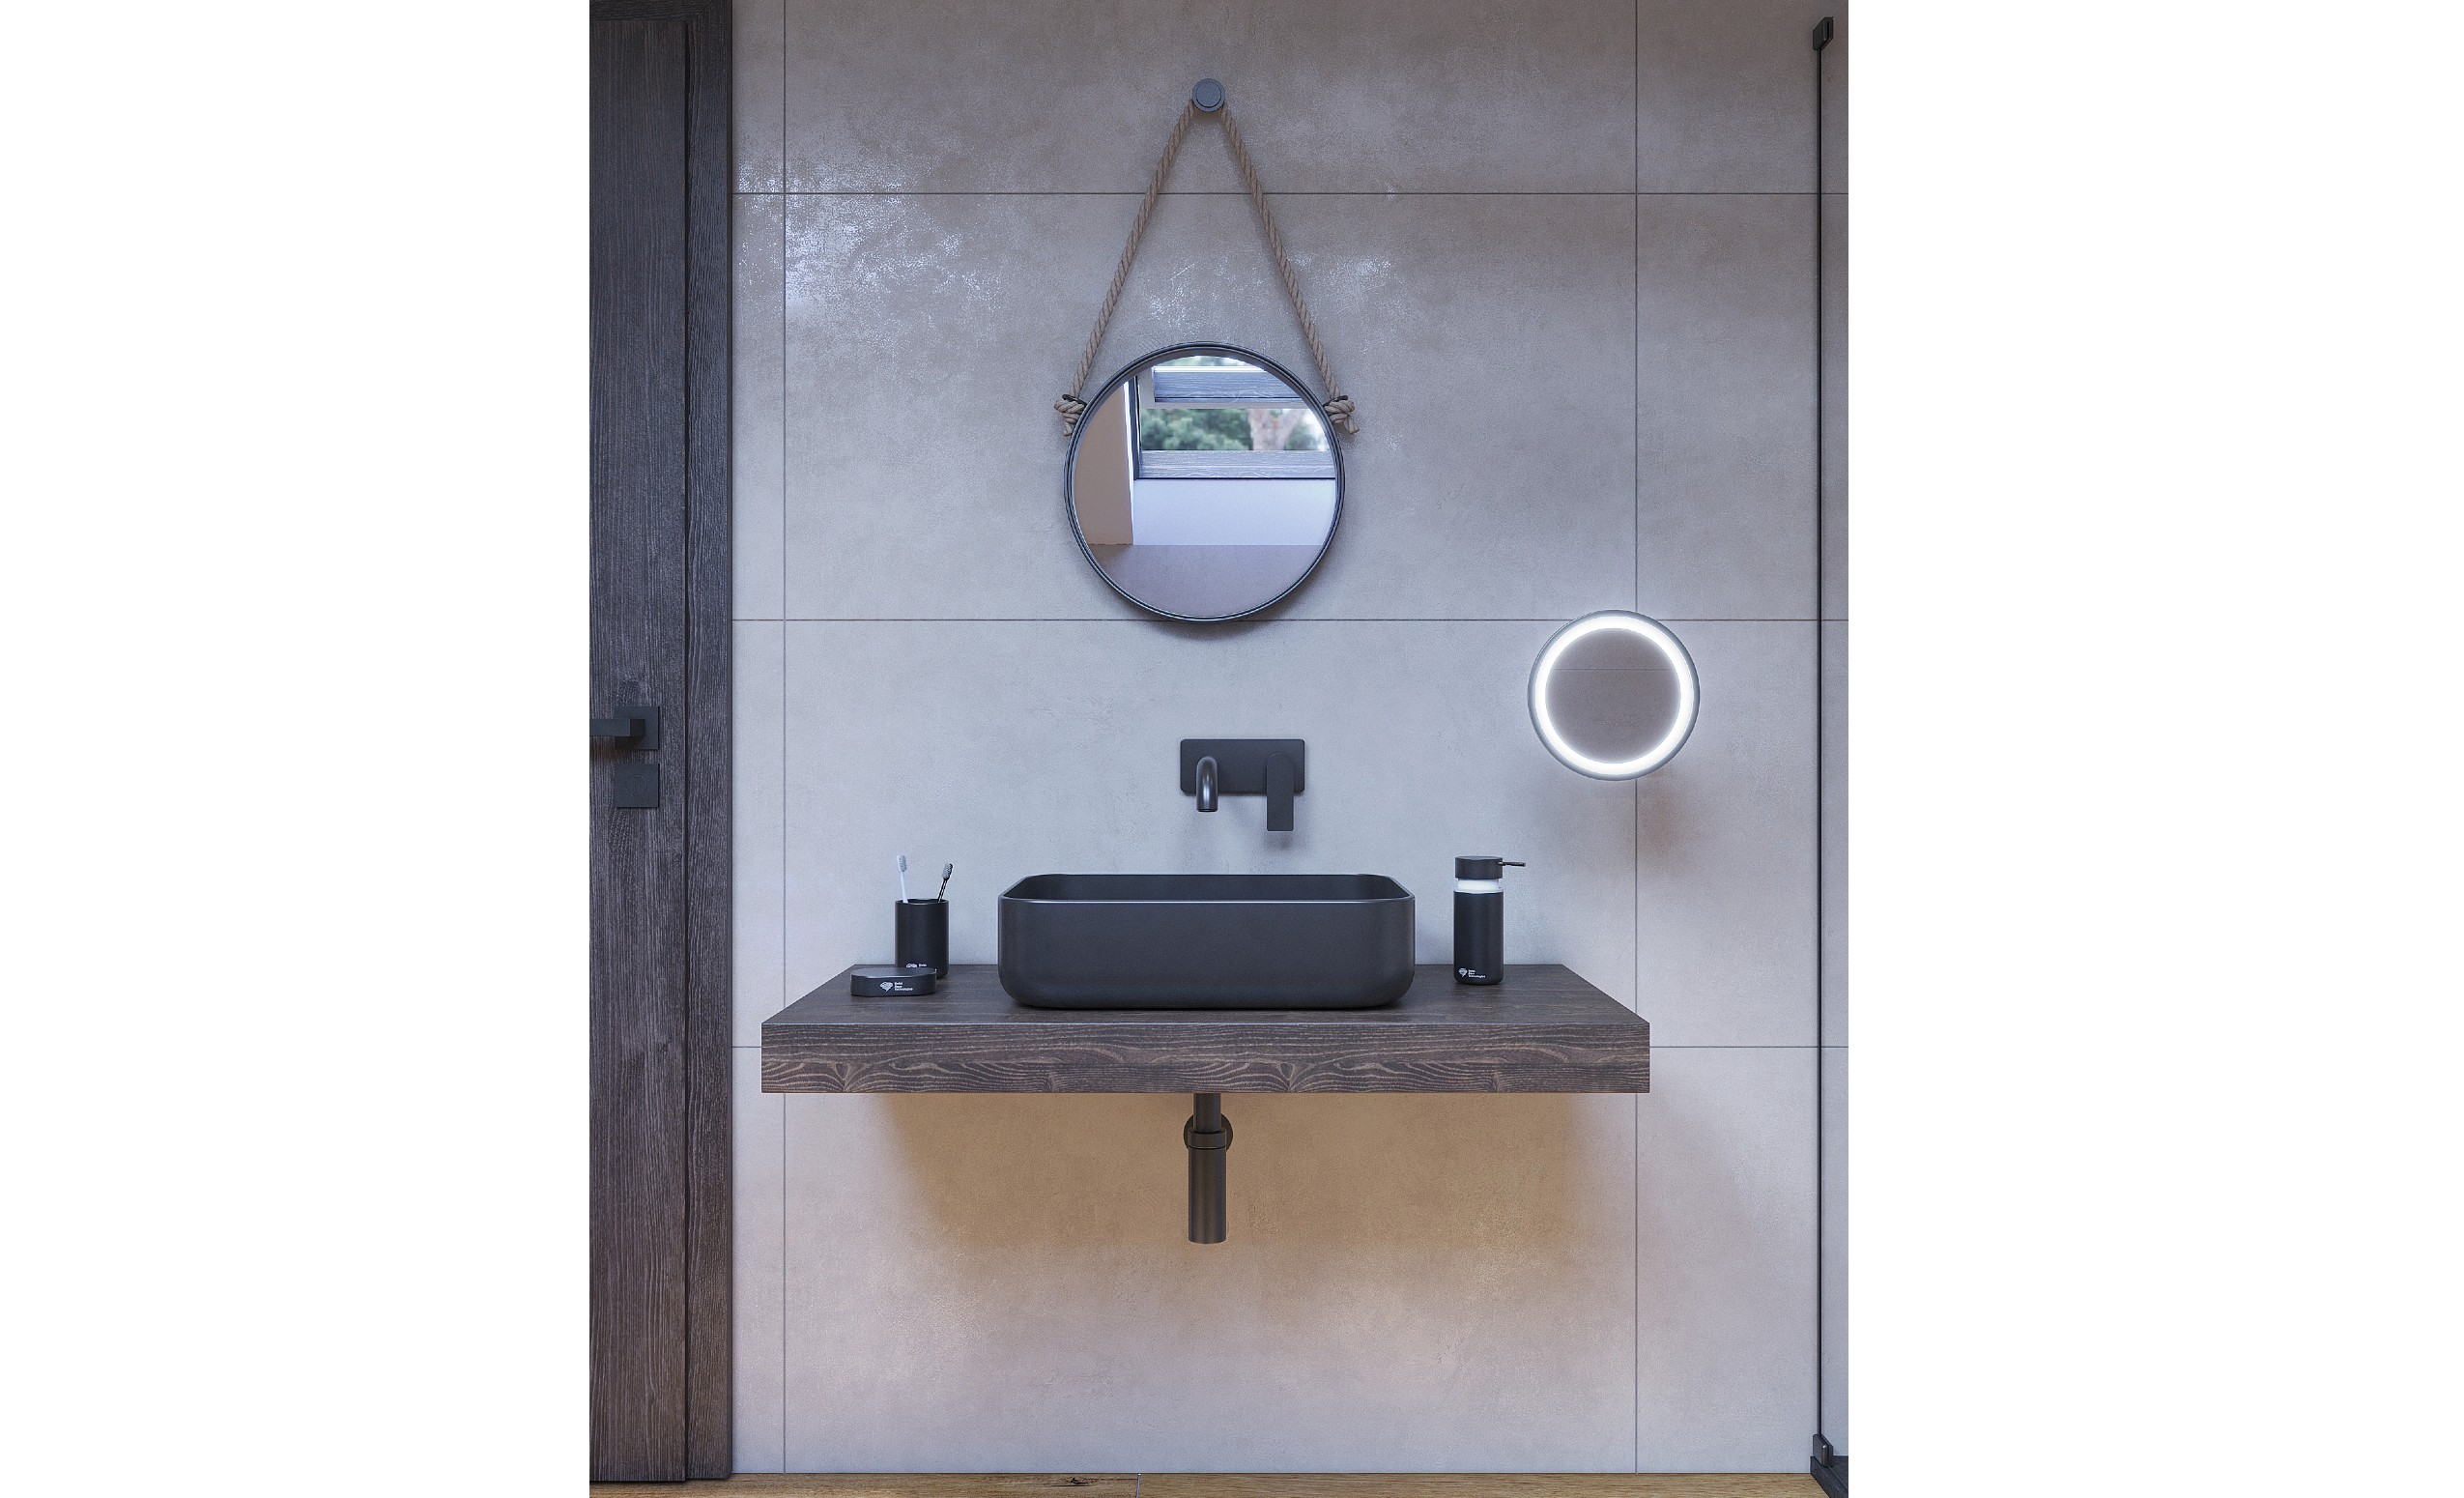 Podkrovni-koupelna-cerne-wc-a-umyvadlo-svetle-sede-obklady-drevena-podlaha-002.jpg